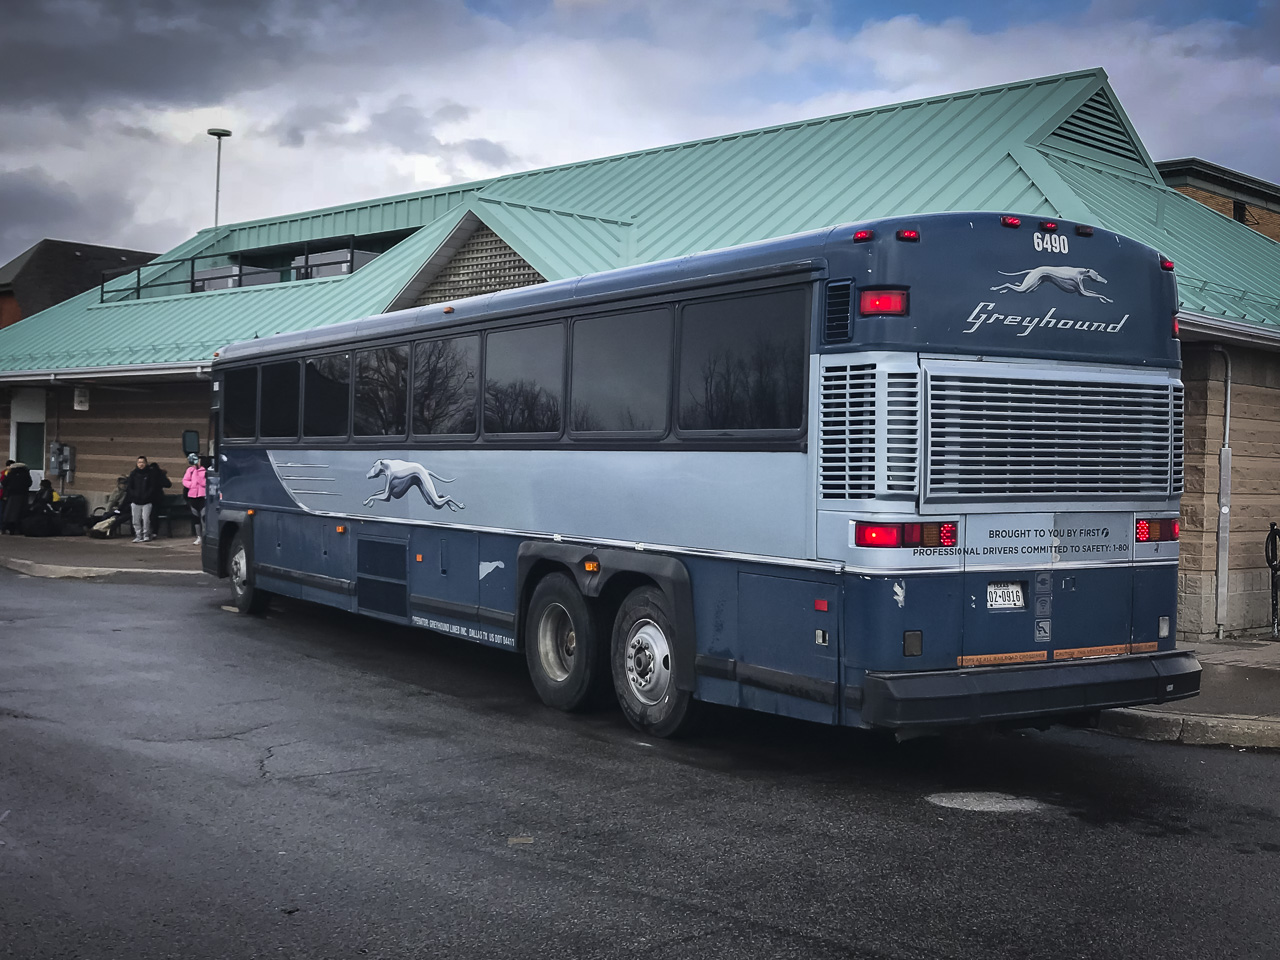 The Toronto to Niagara Falls bus has seen better days.